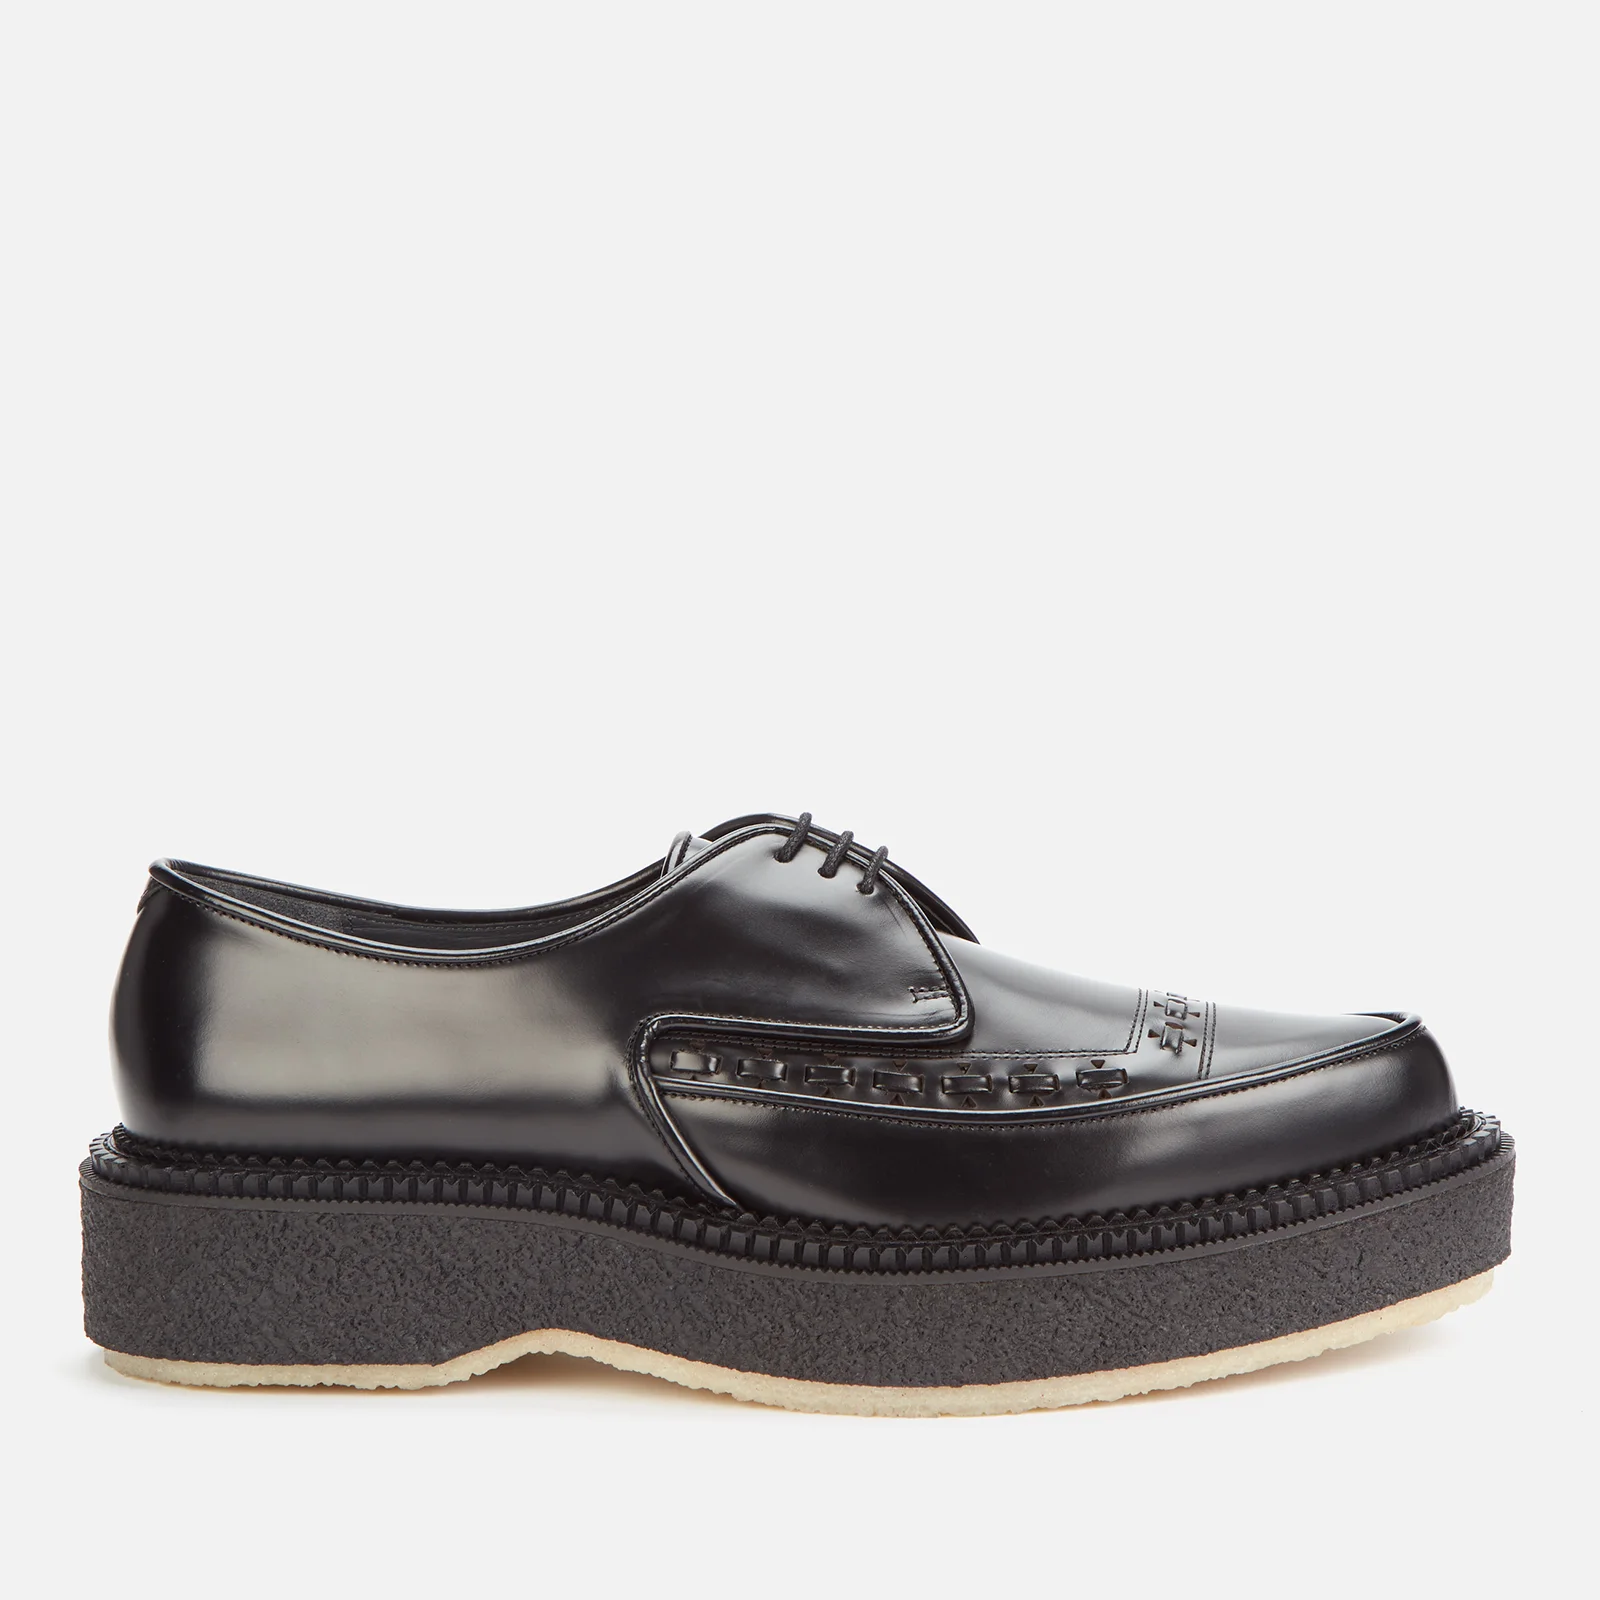 Adieu Men's Type 101 Leather Crepe Sole 3-Eye Shoes - Black Image 1